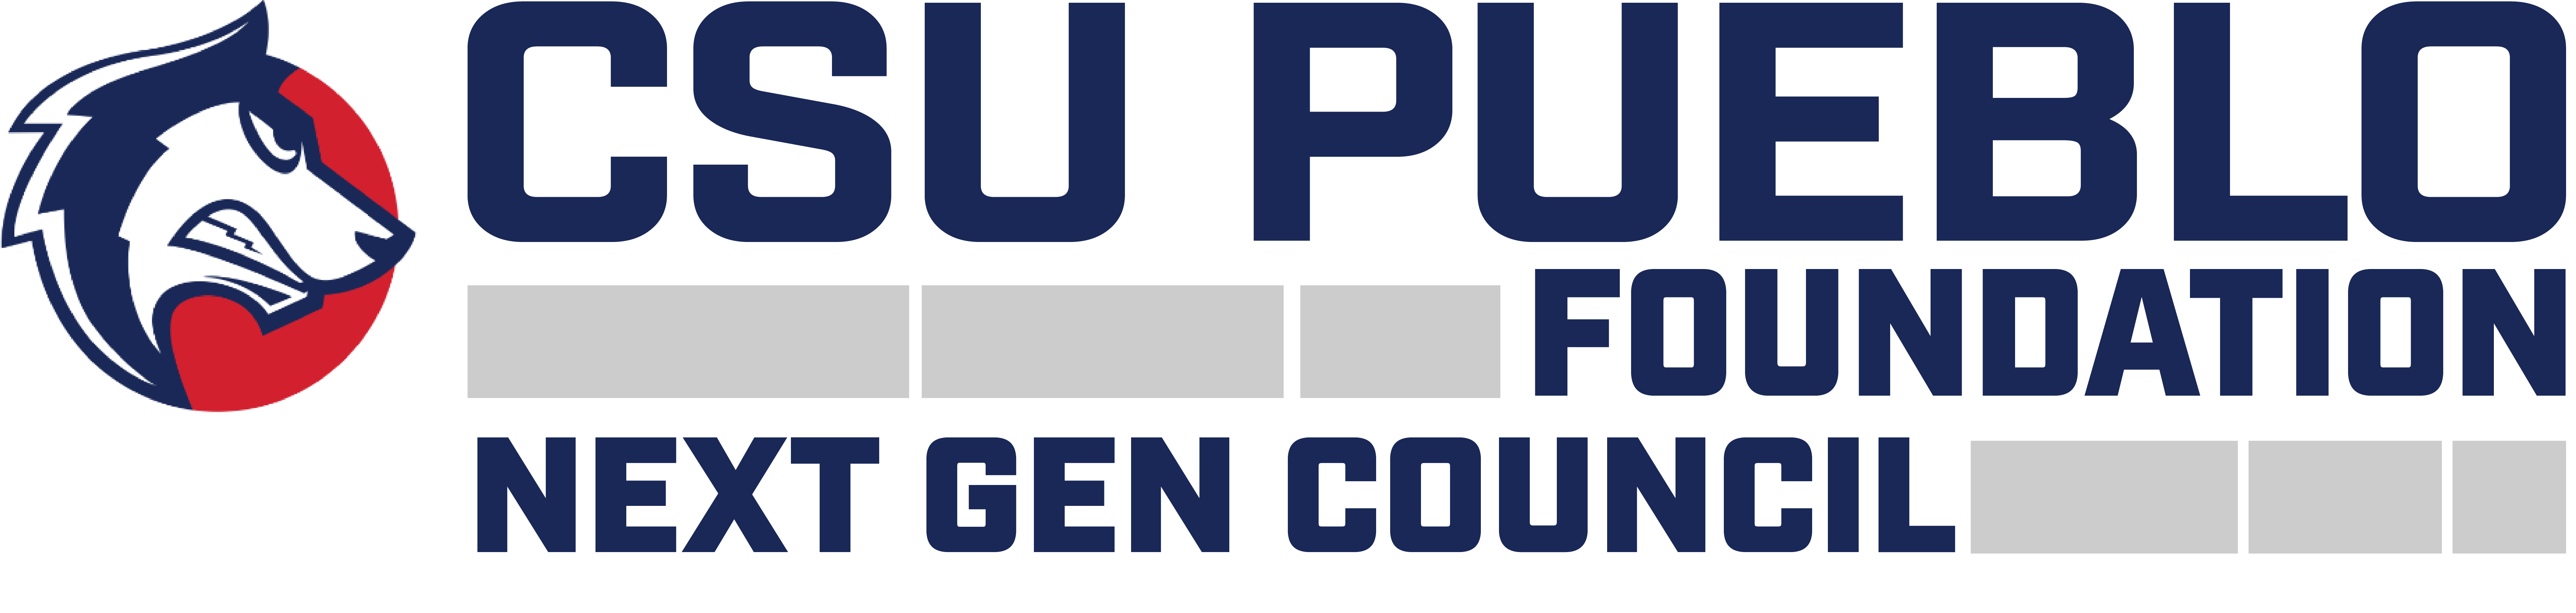 next gen council logo